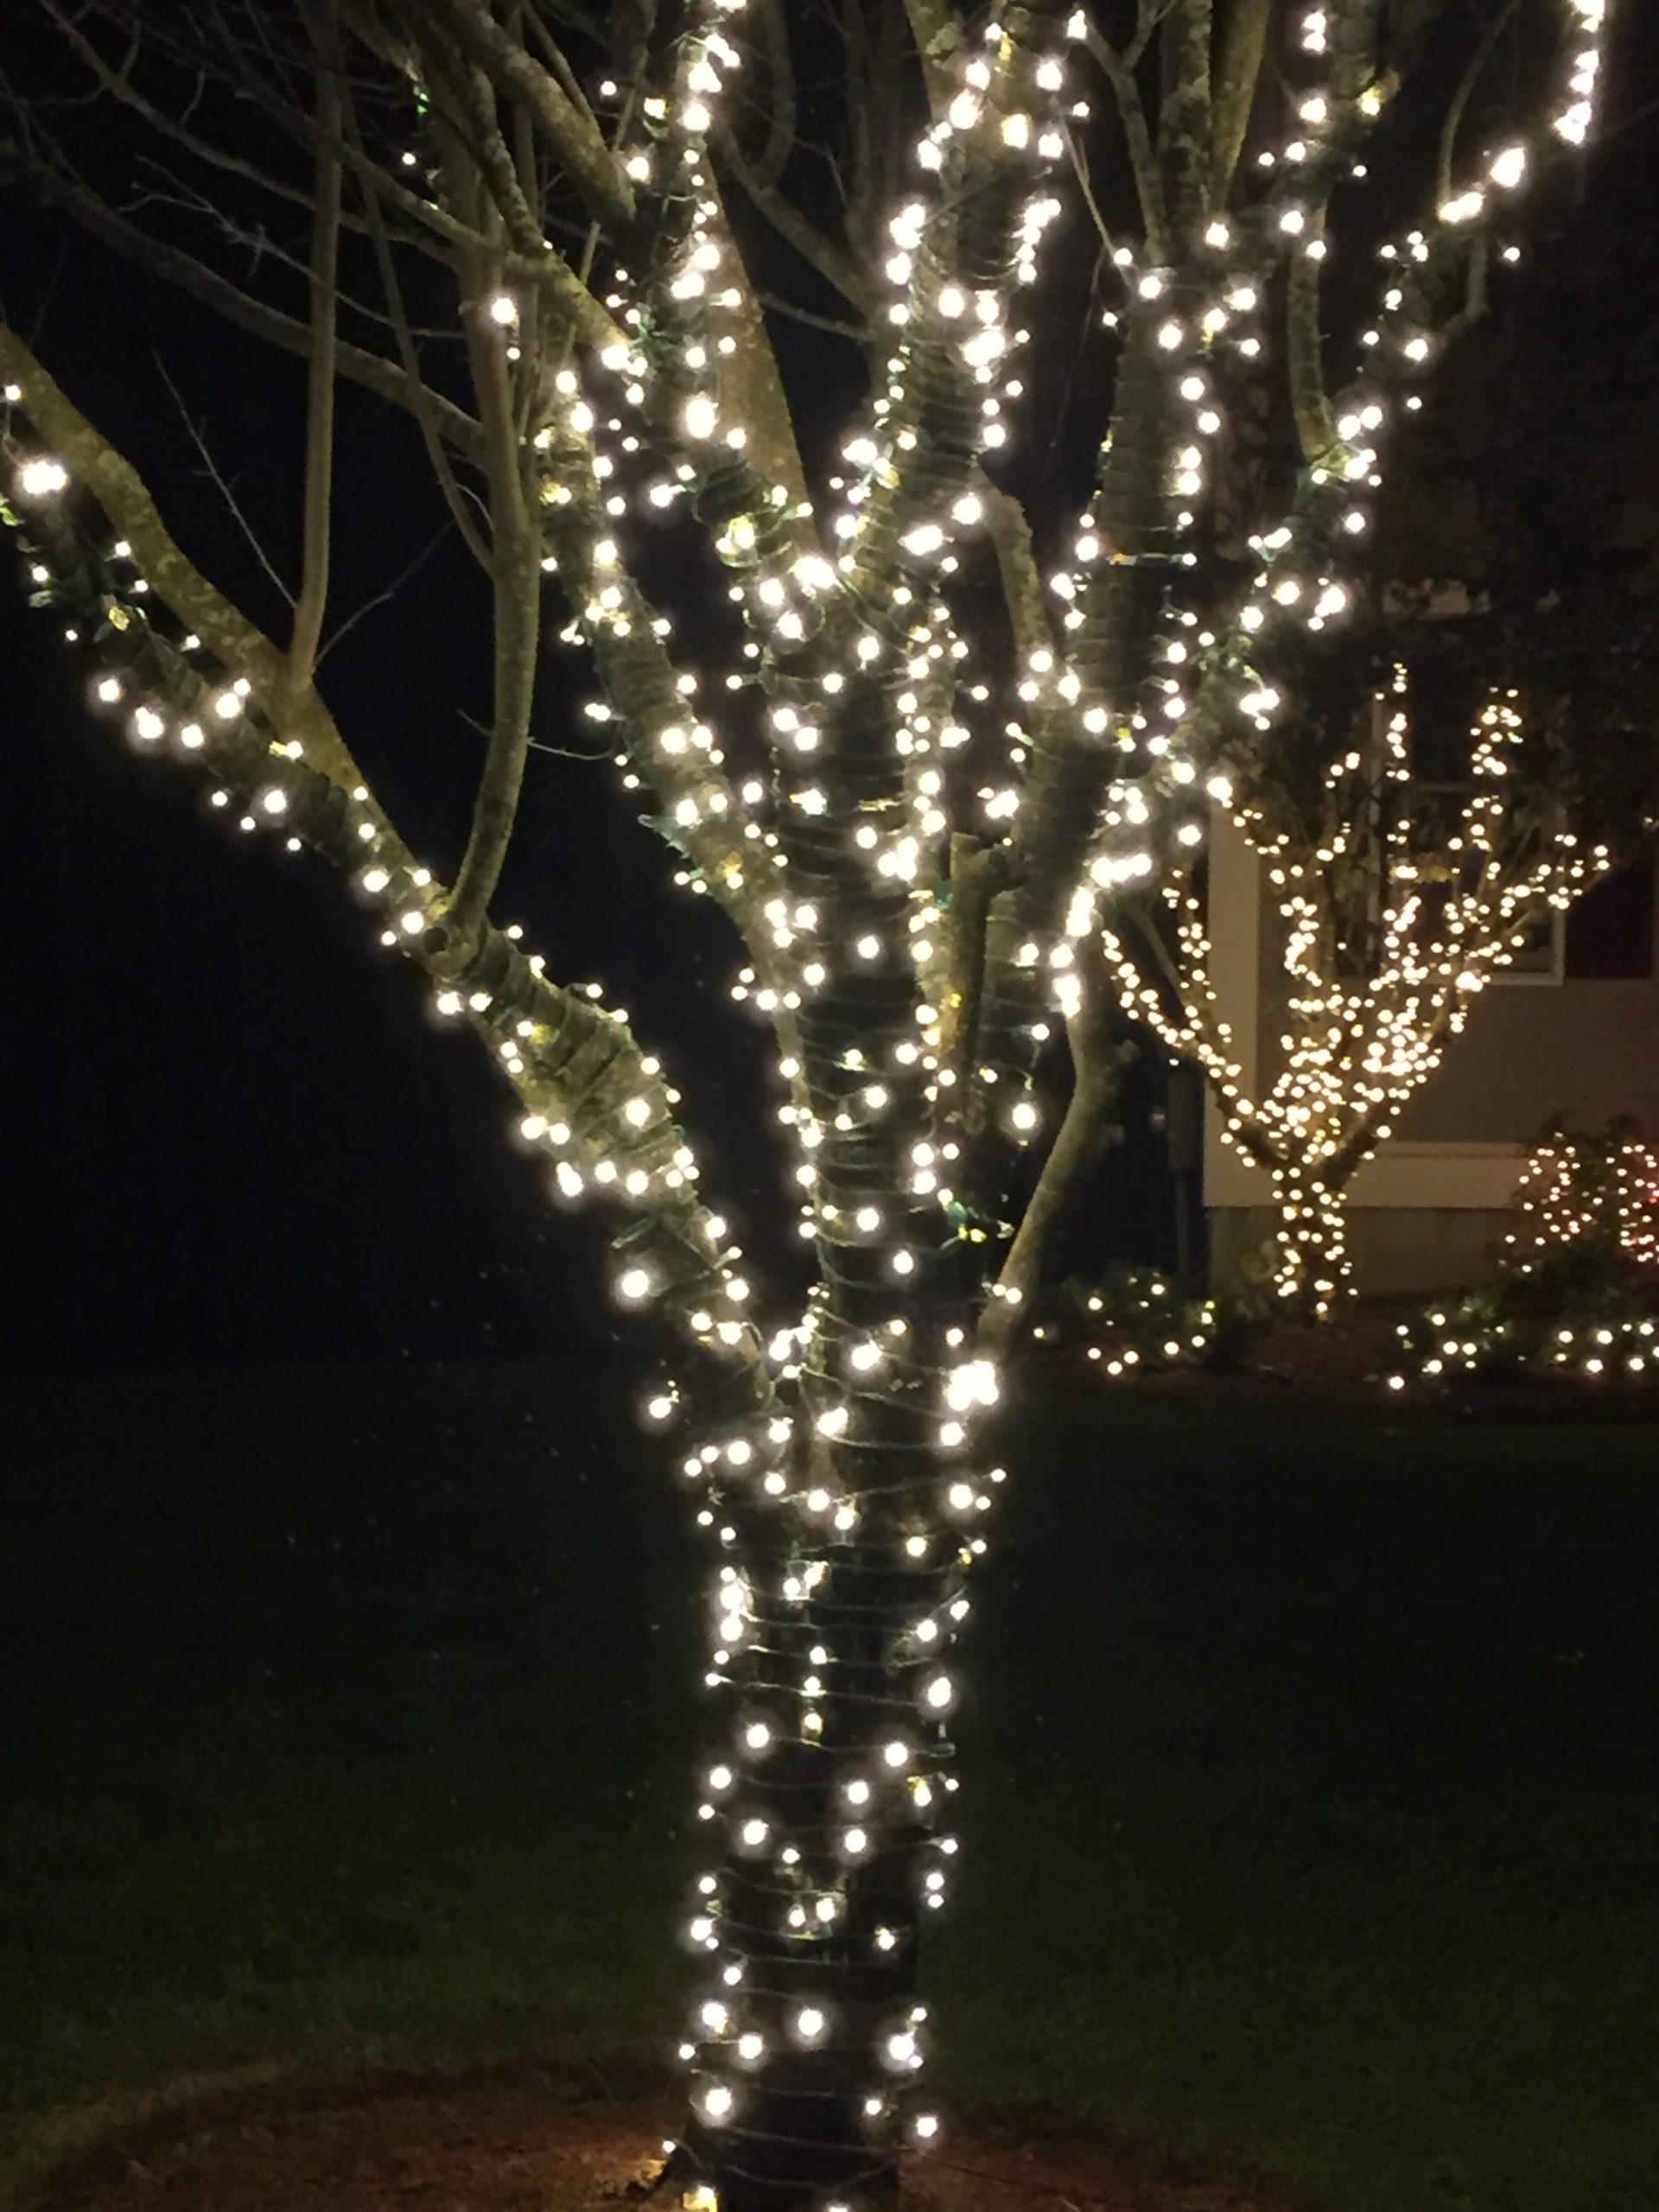 Professional Holiday Lighting - Tree